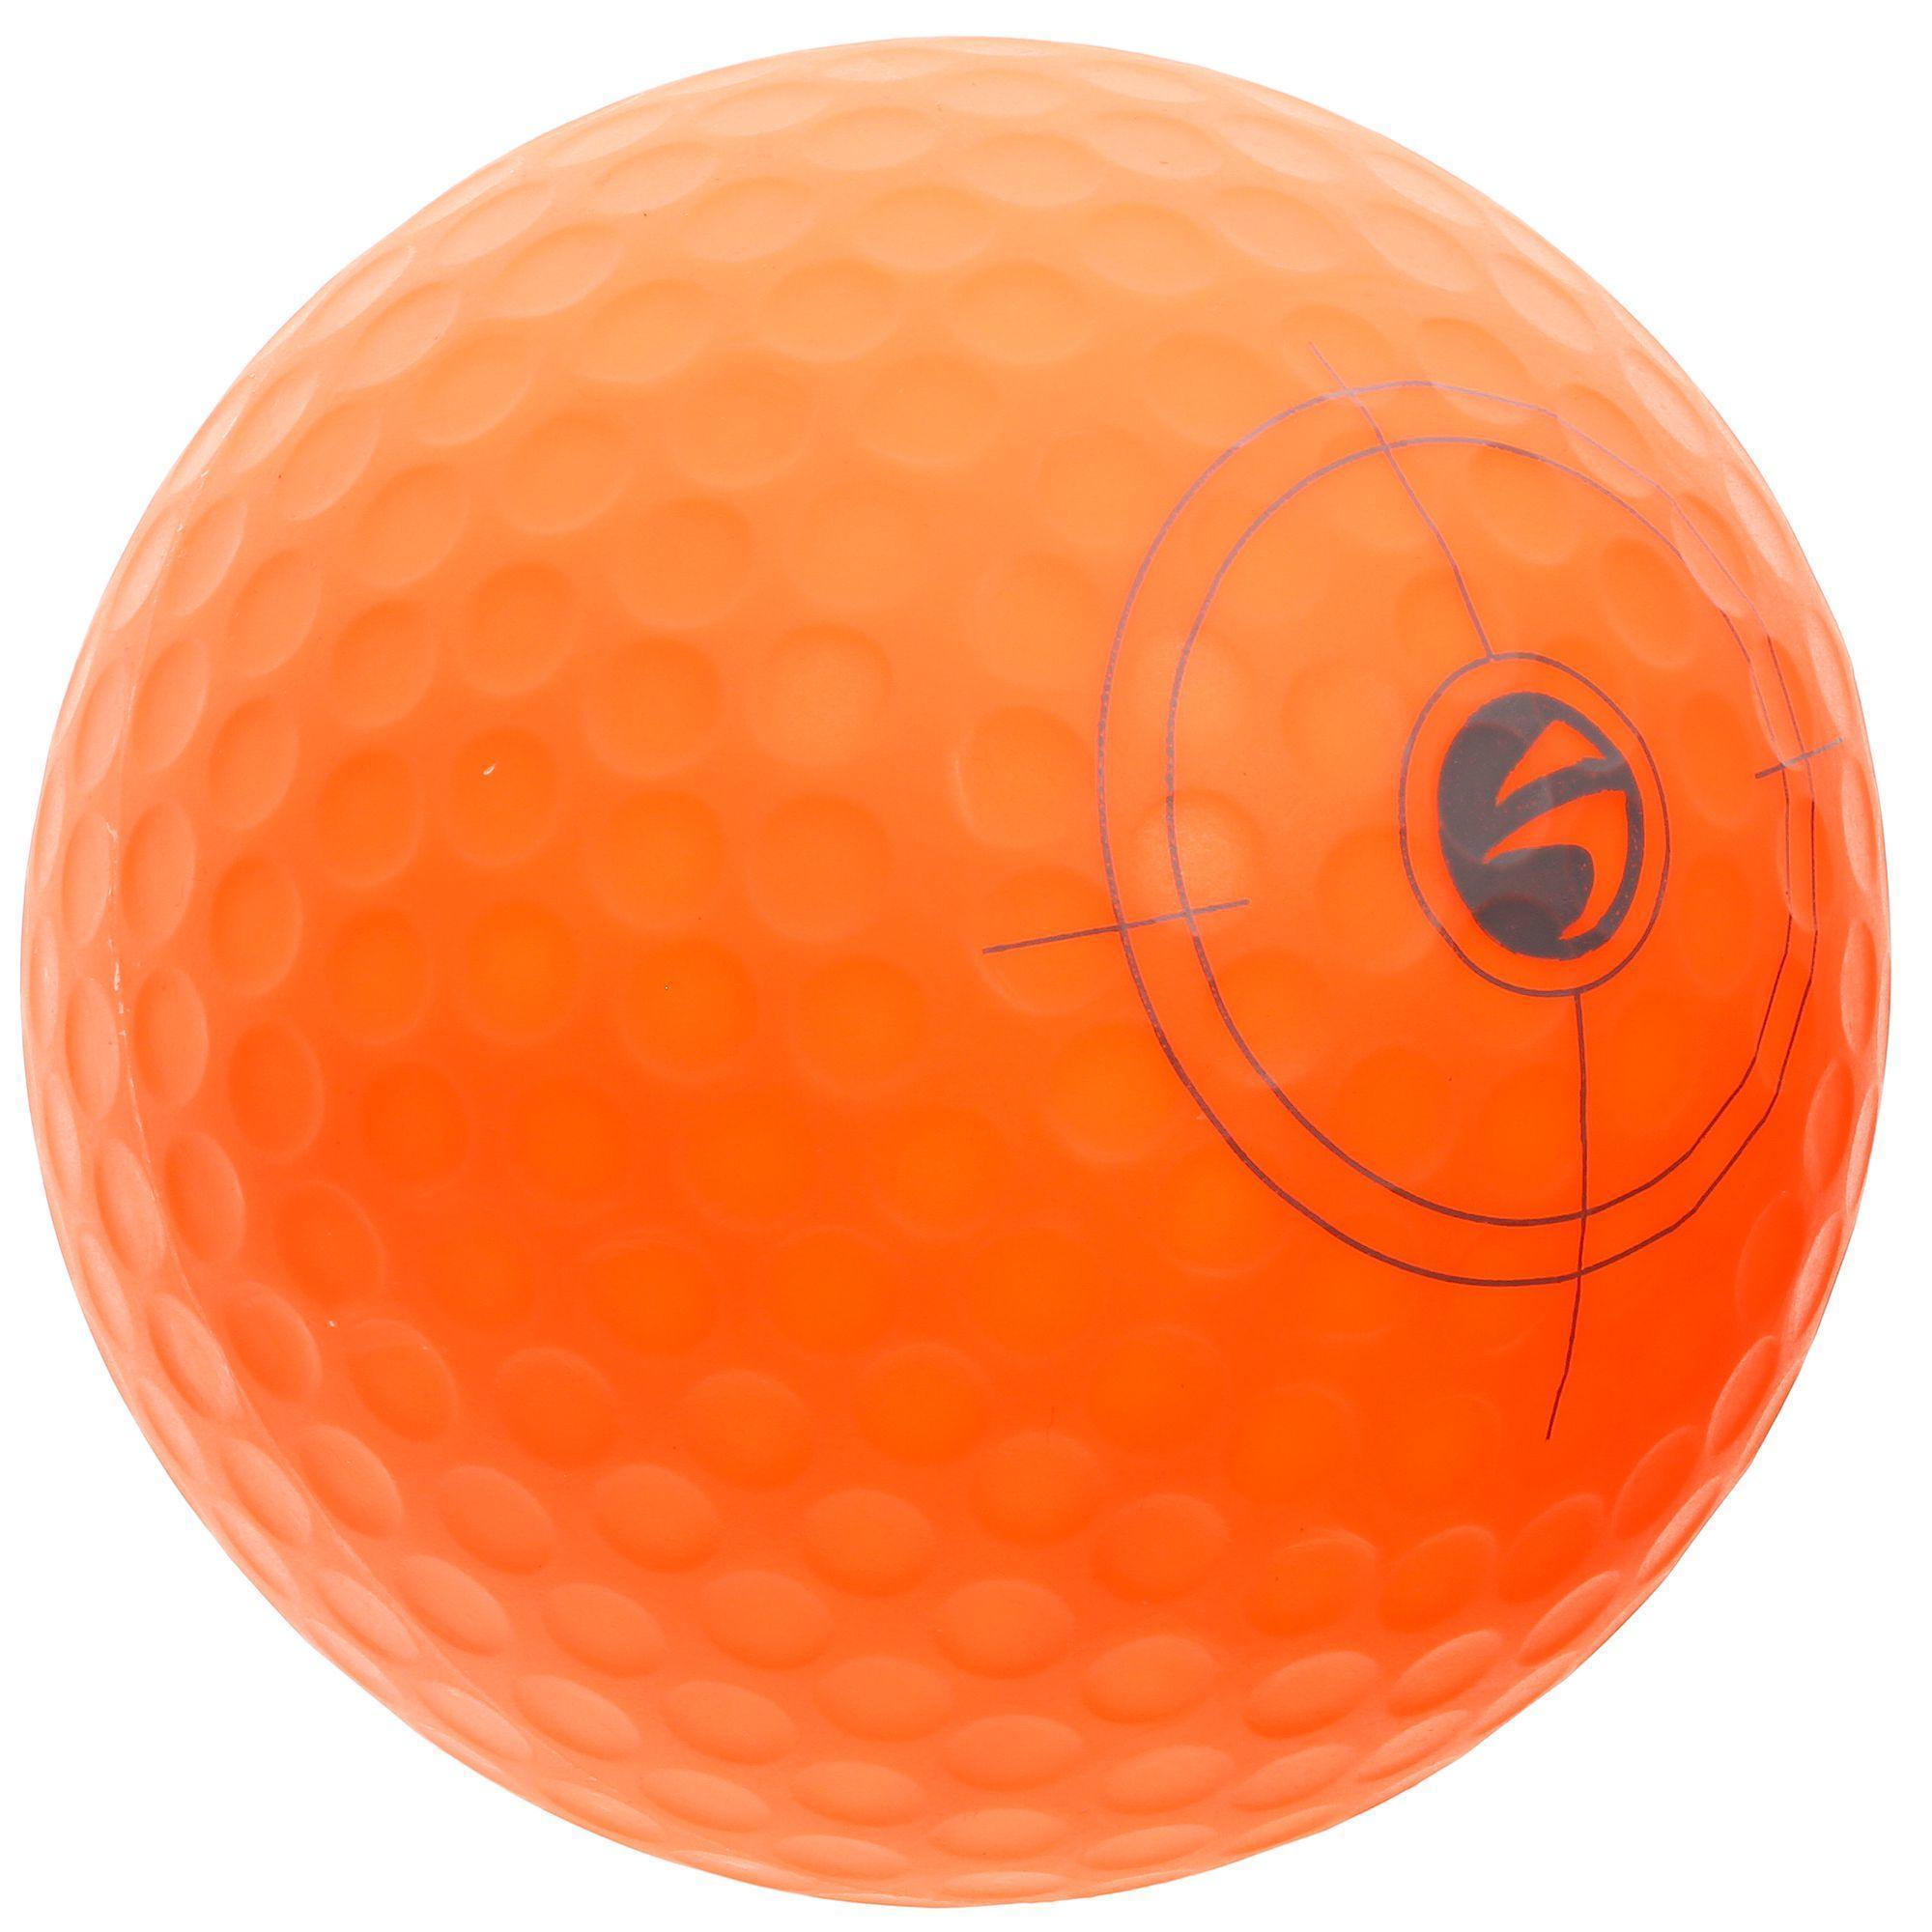 decathlon golf balls